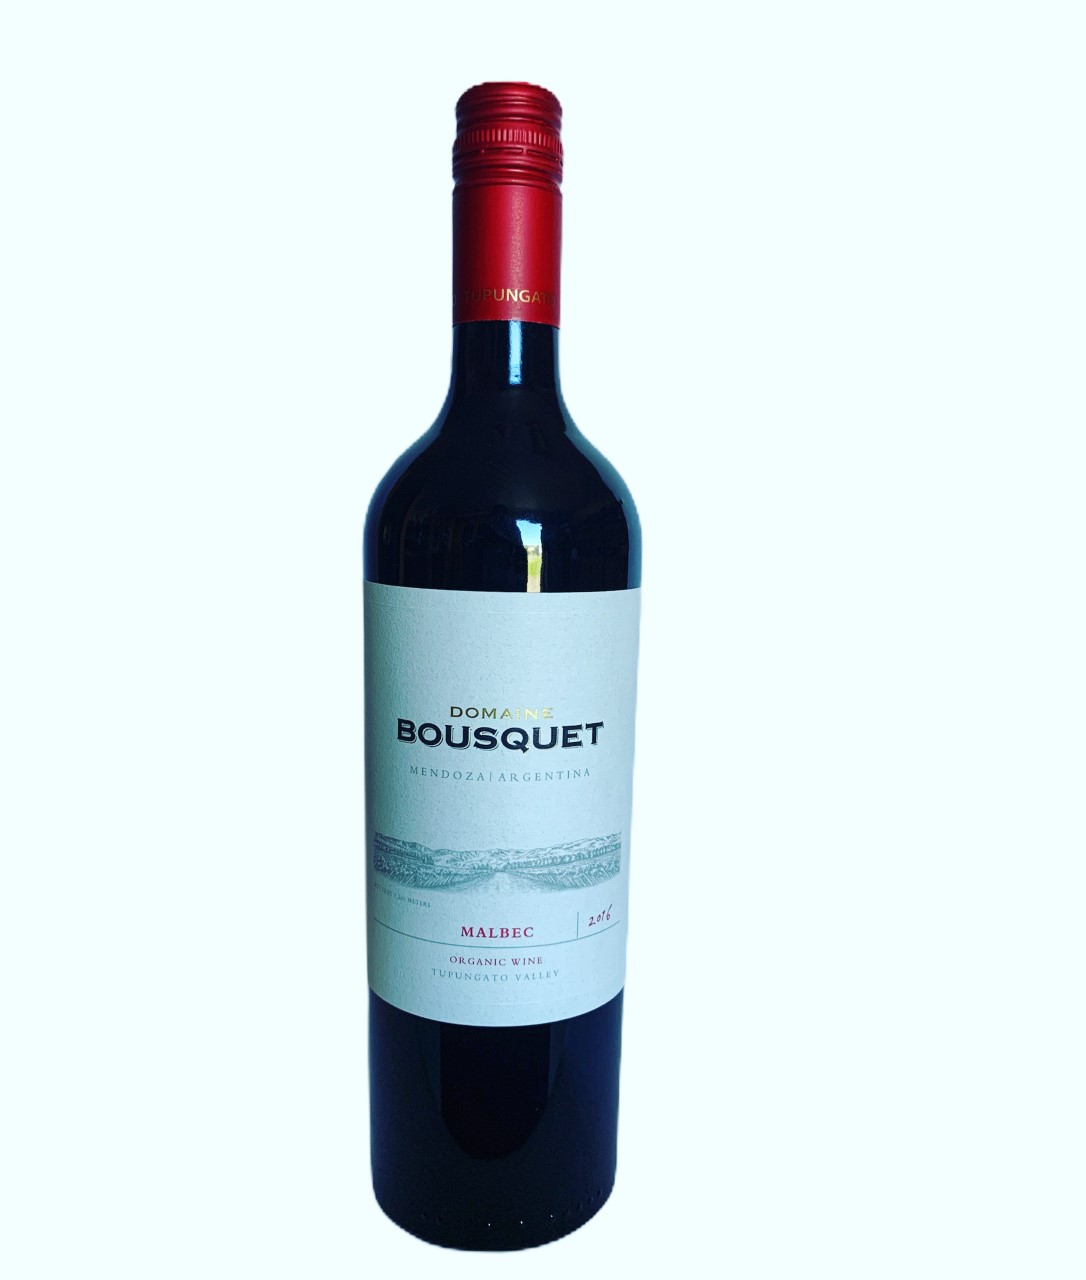 Domaine Bousquet Malbec Organic Wine 2016